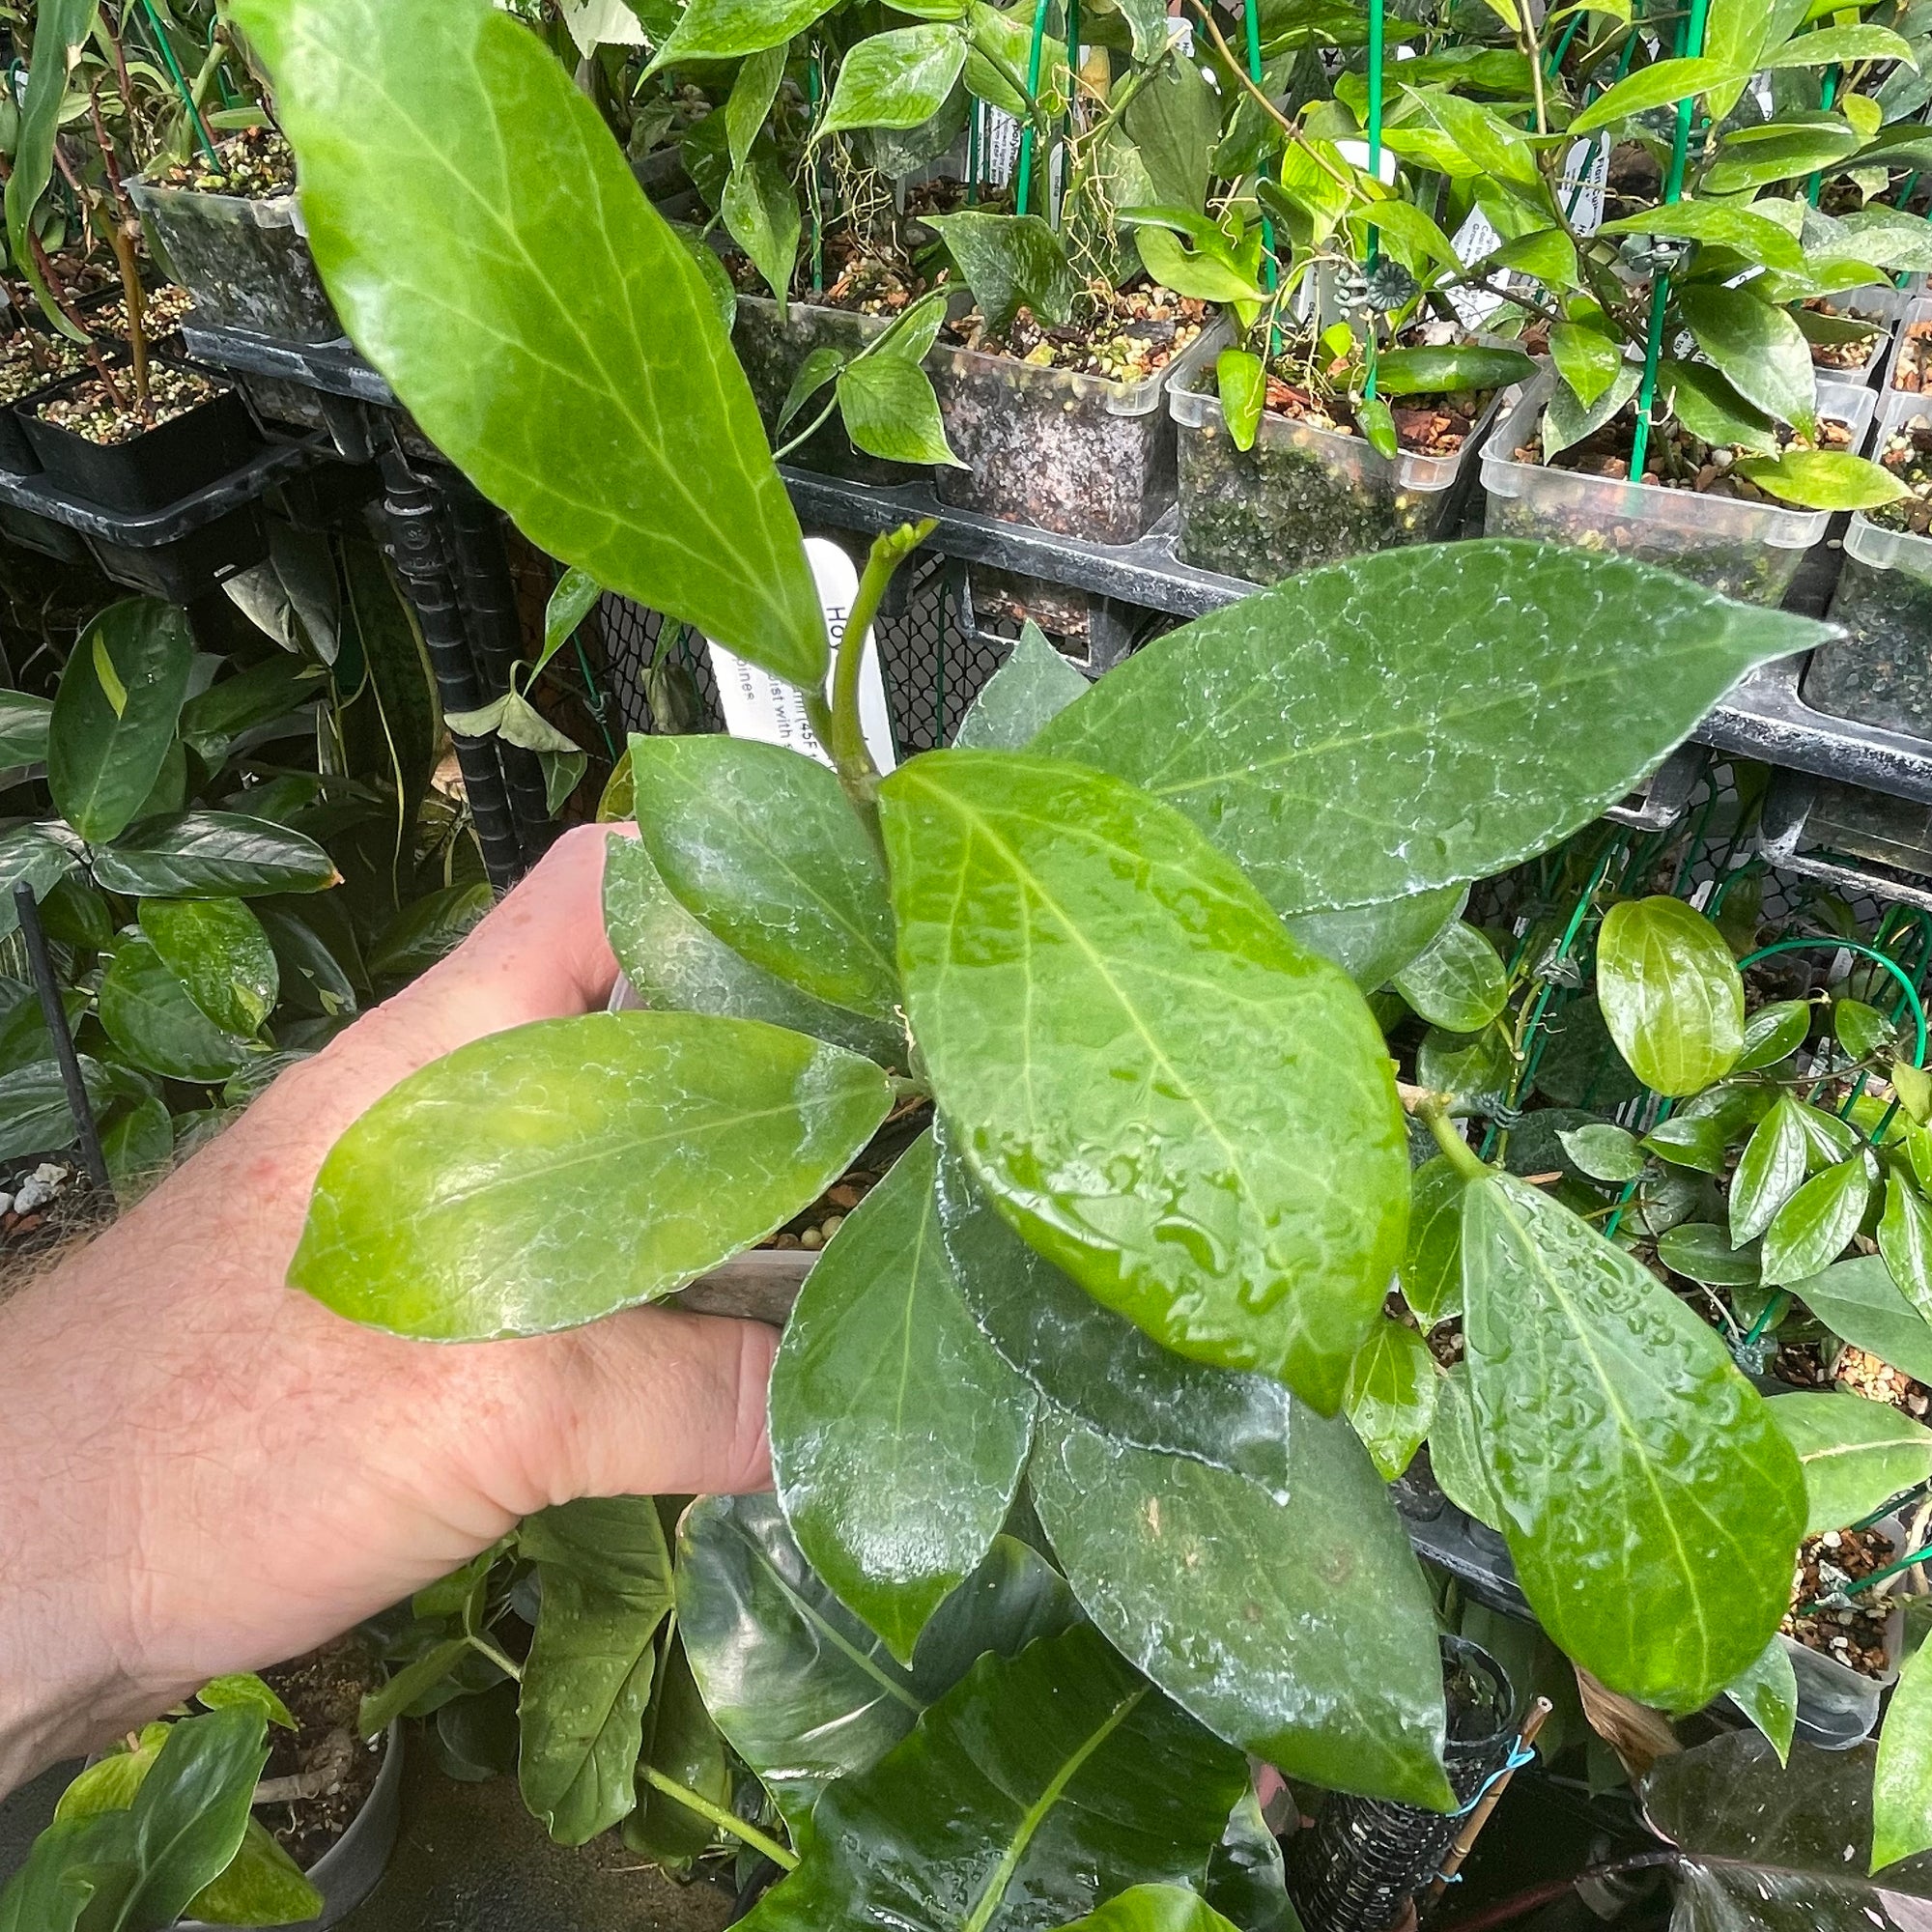 Hoya camphorifolia